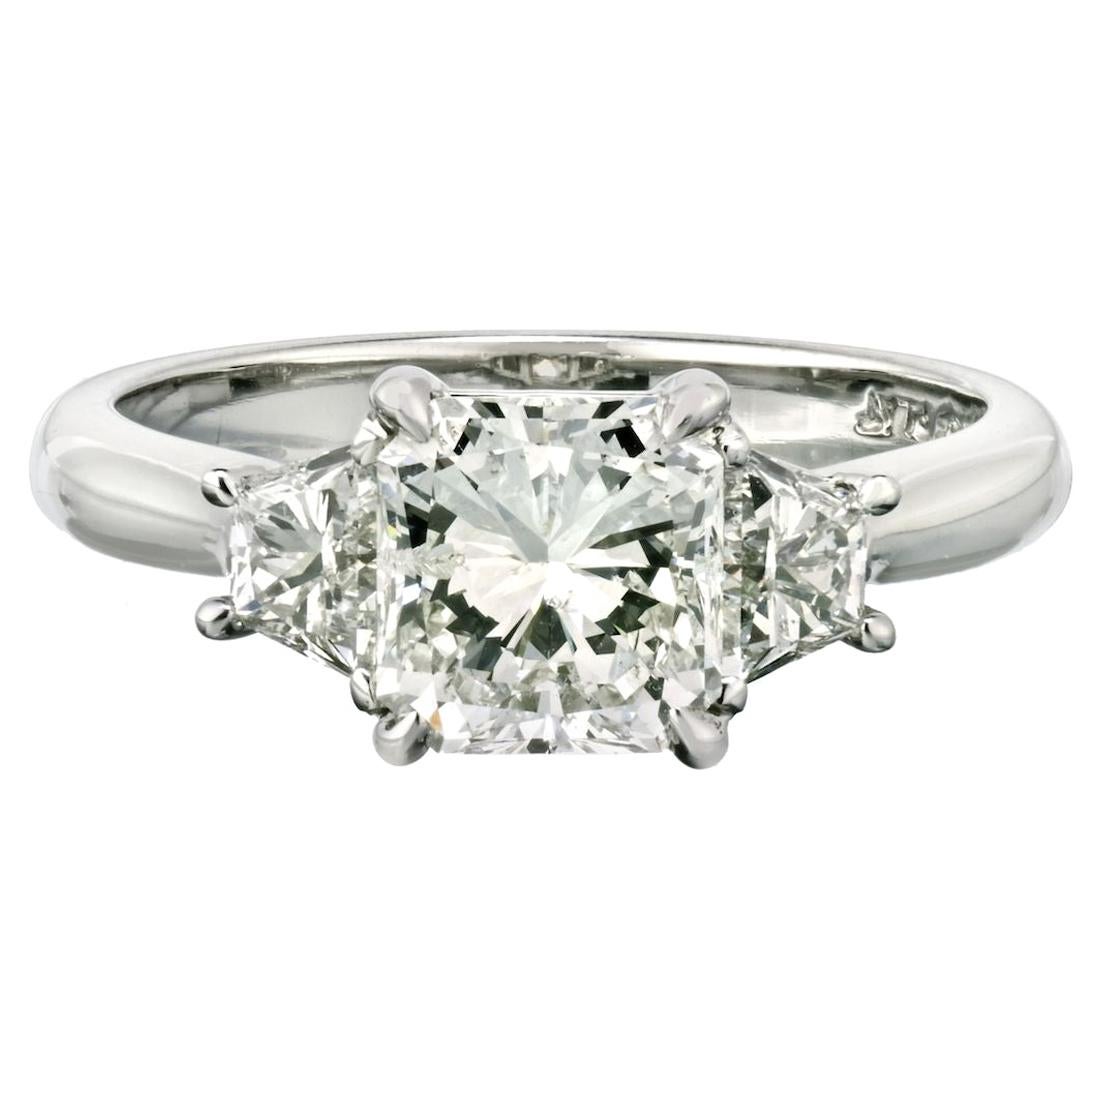 1.50 Carat Radiant Cut Diamond H/SI2 GIA Three-Stone Engagement Ring